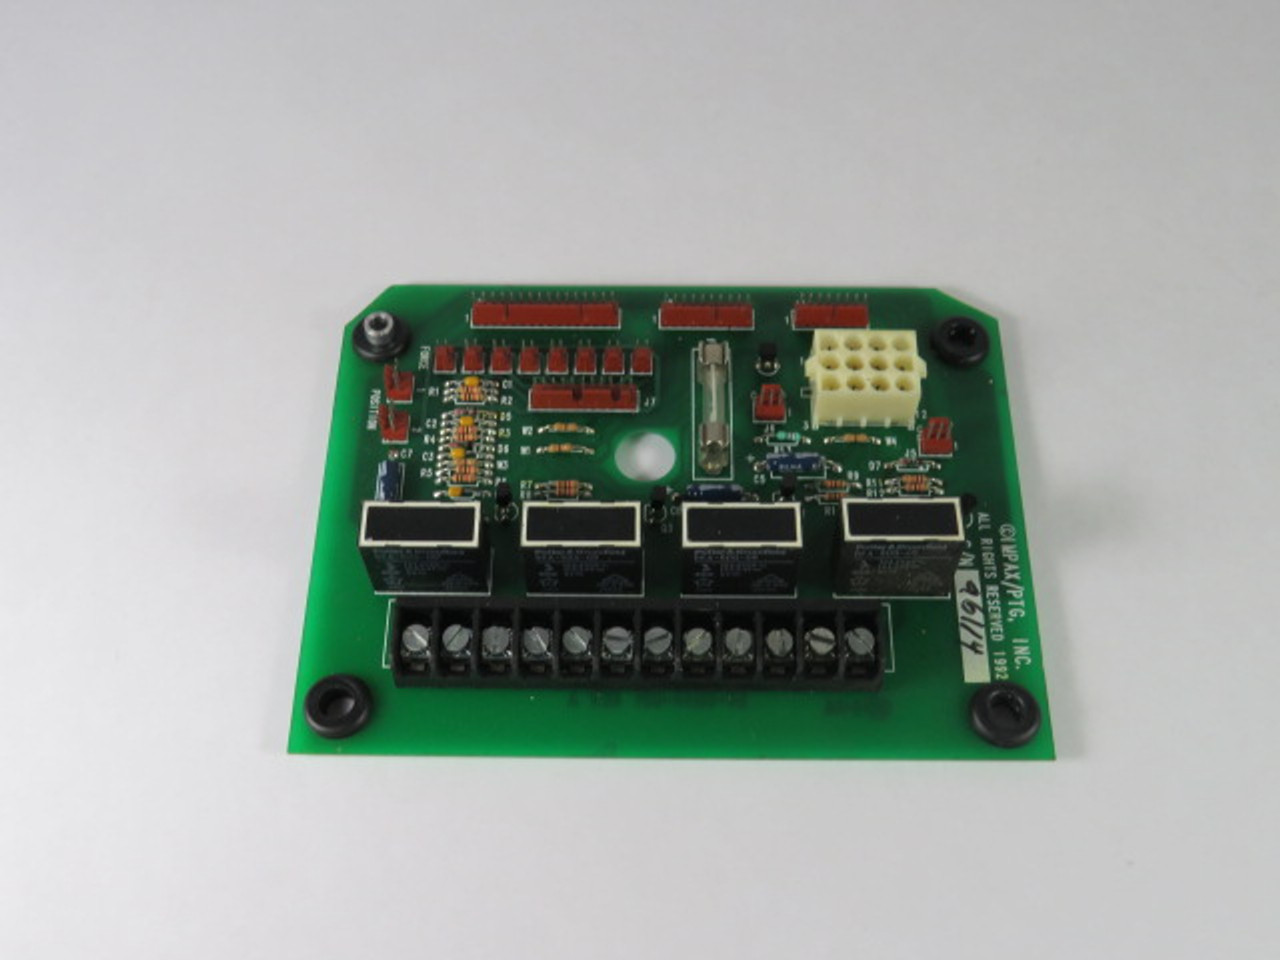 Impax 84-0054-001 PCB Circuit Board USED